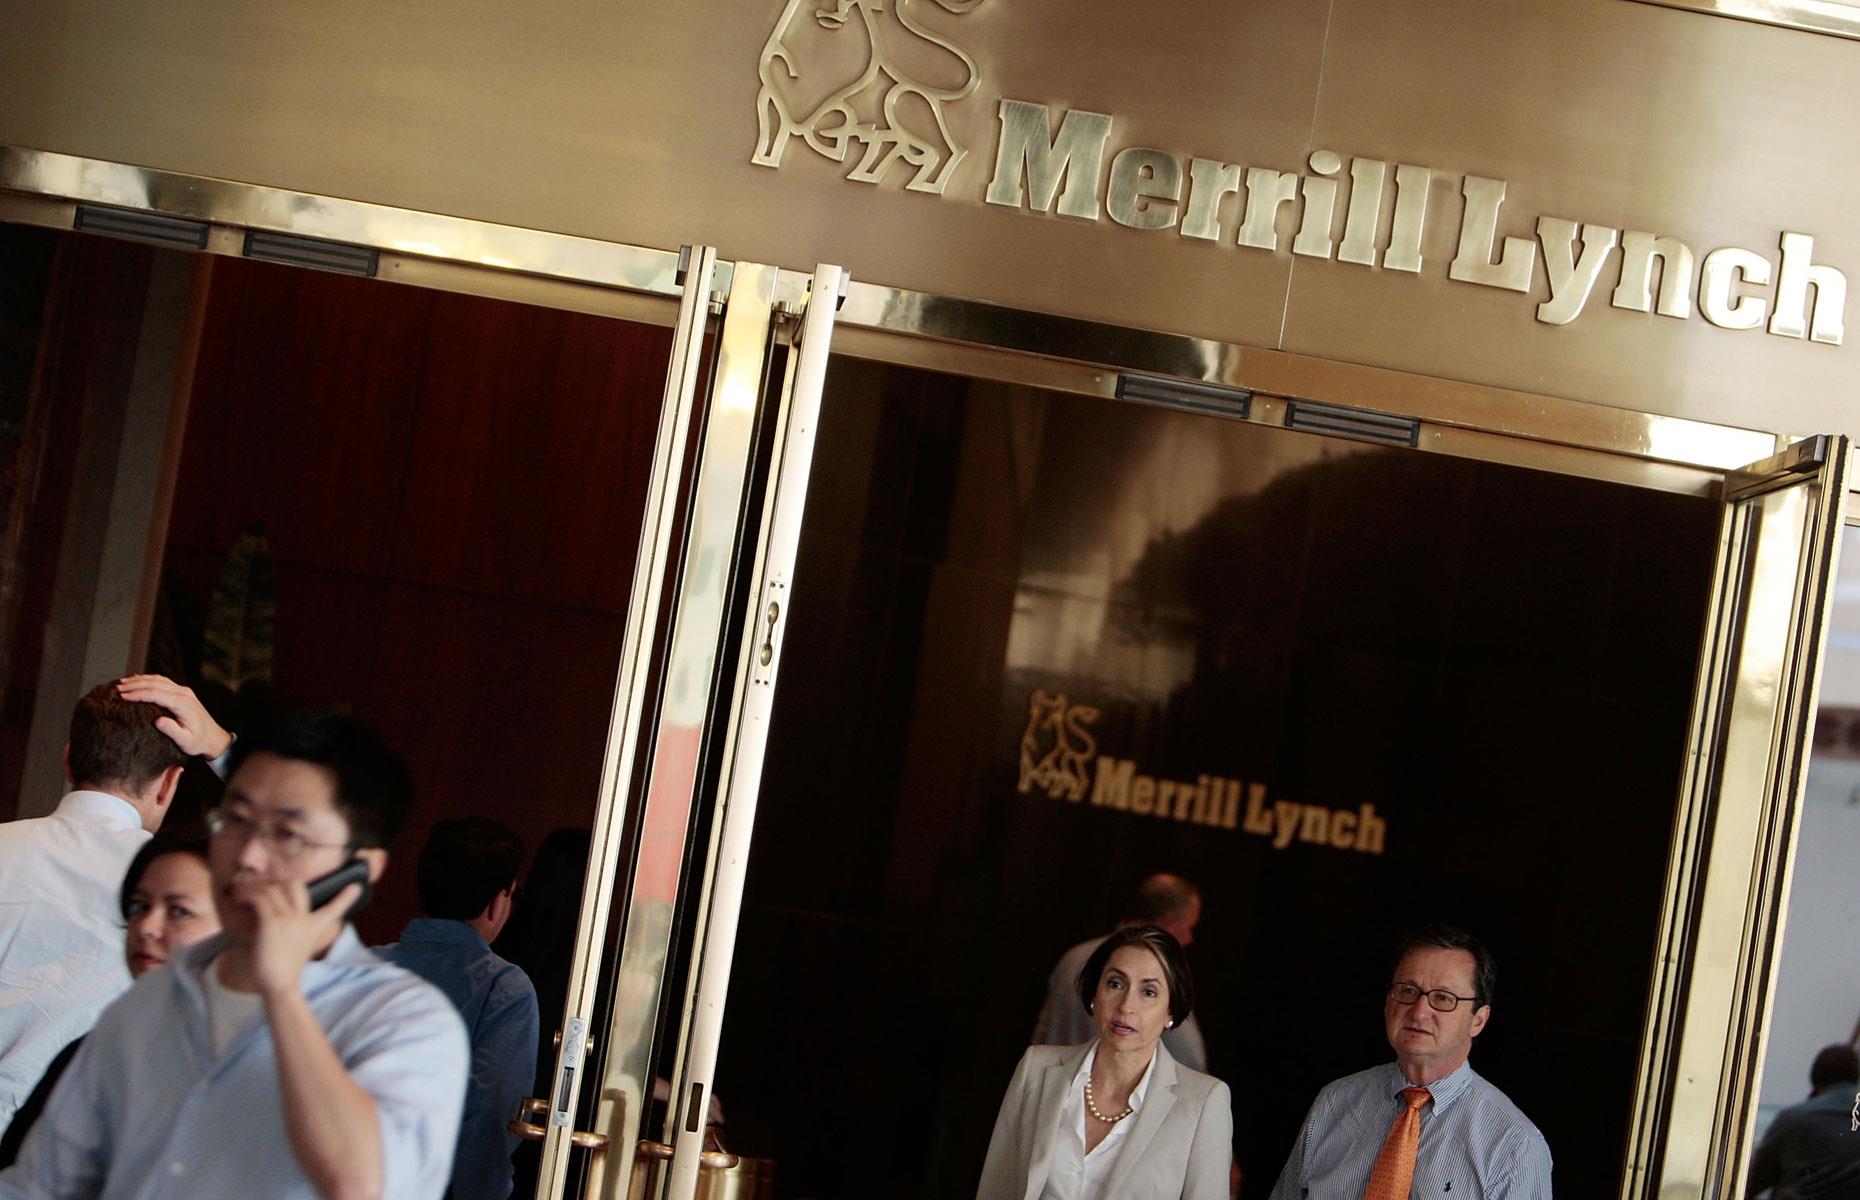 2008: Merrill Lynch